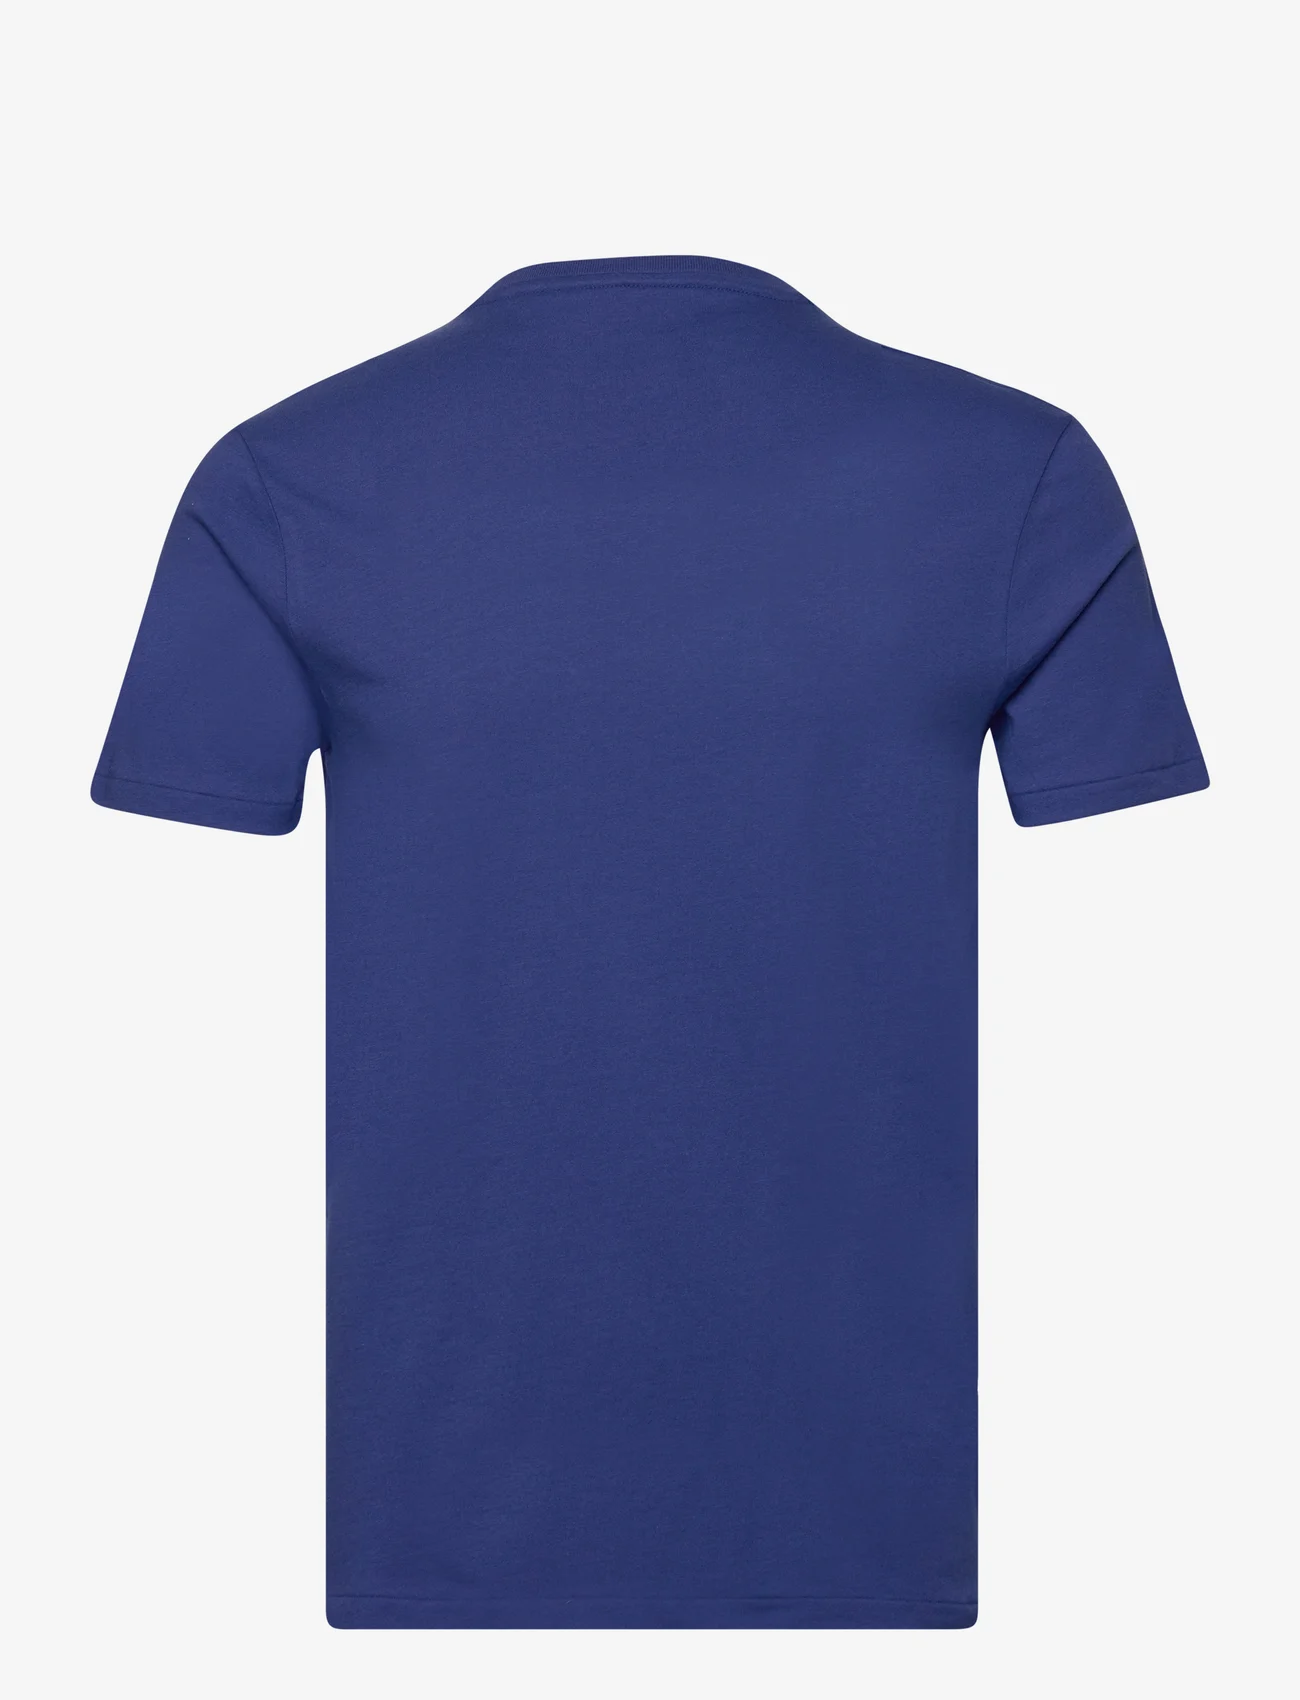 Polo Ralph Lauren - Custom Slim Fit Jersey Crewneck T-Shirt - kortärmade t-shirts - beach royal/c7349 - 1